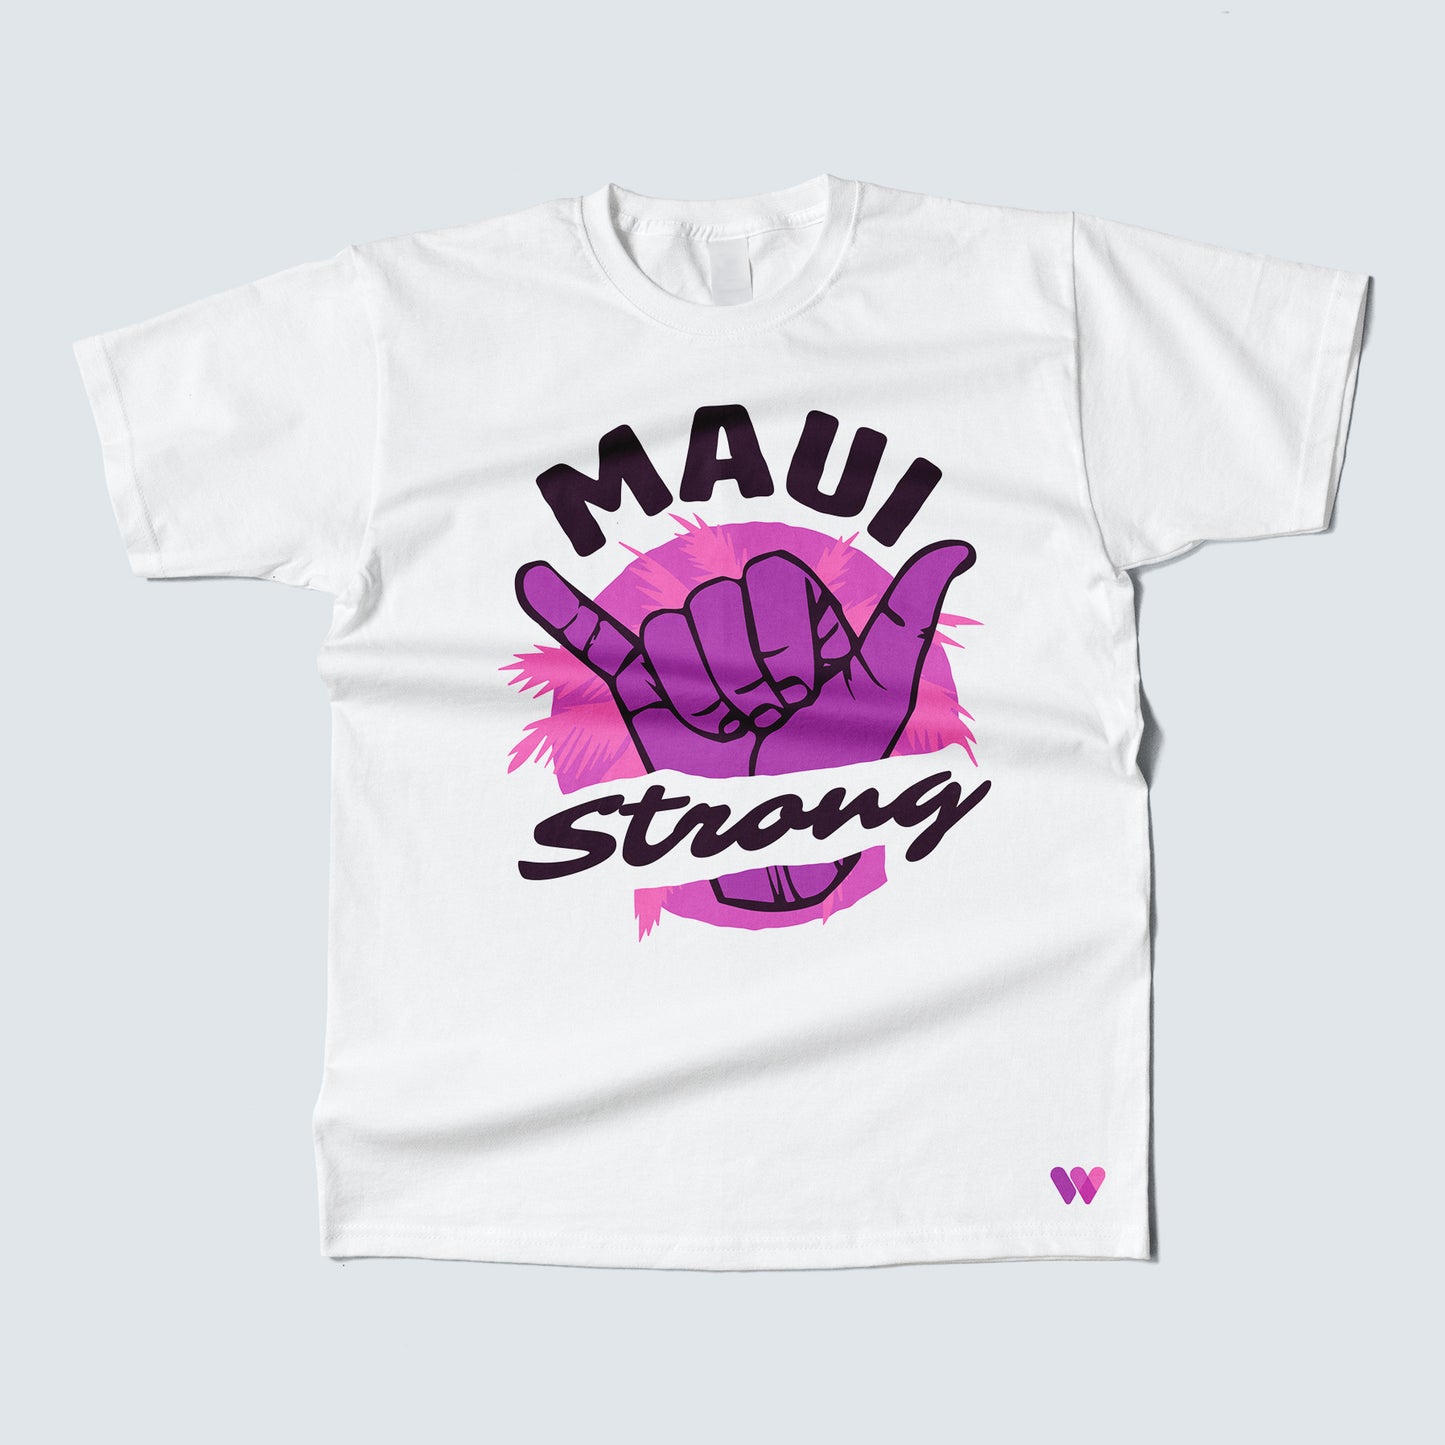 Maui Strong - White t-shirt